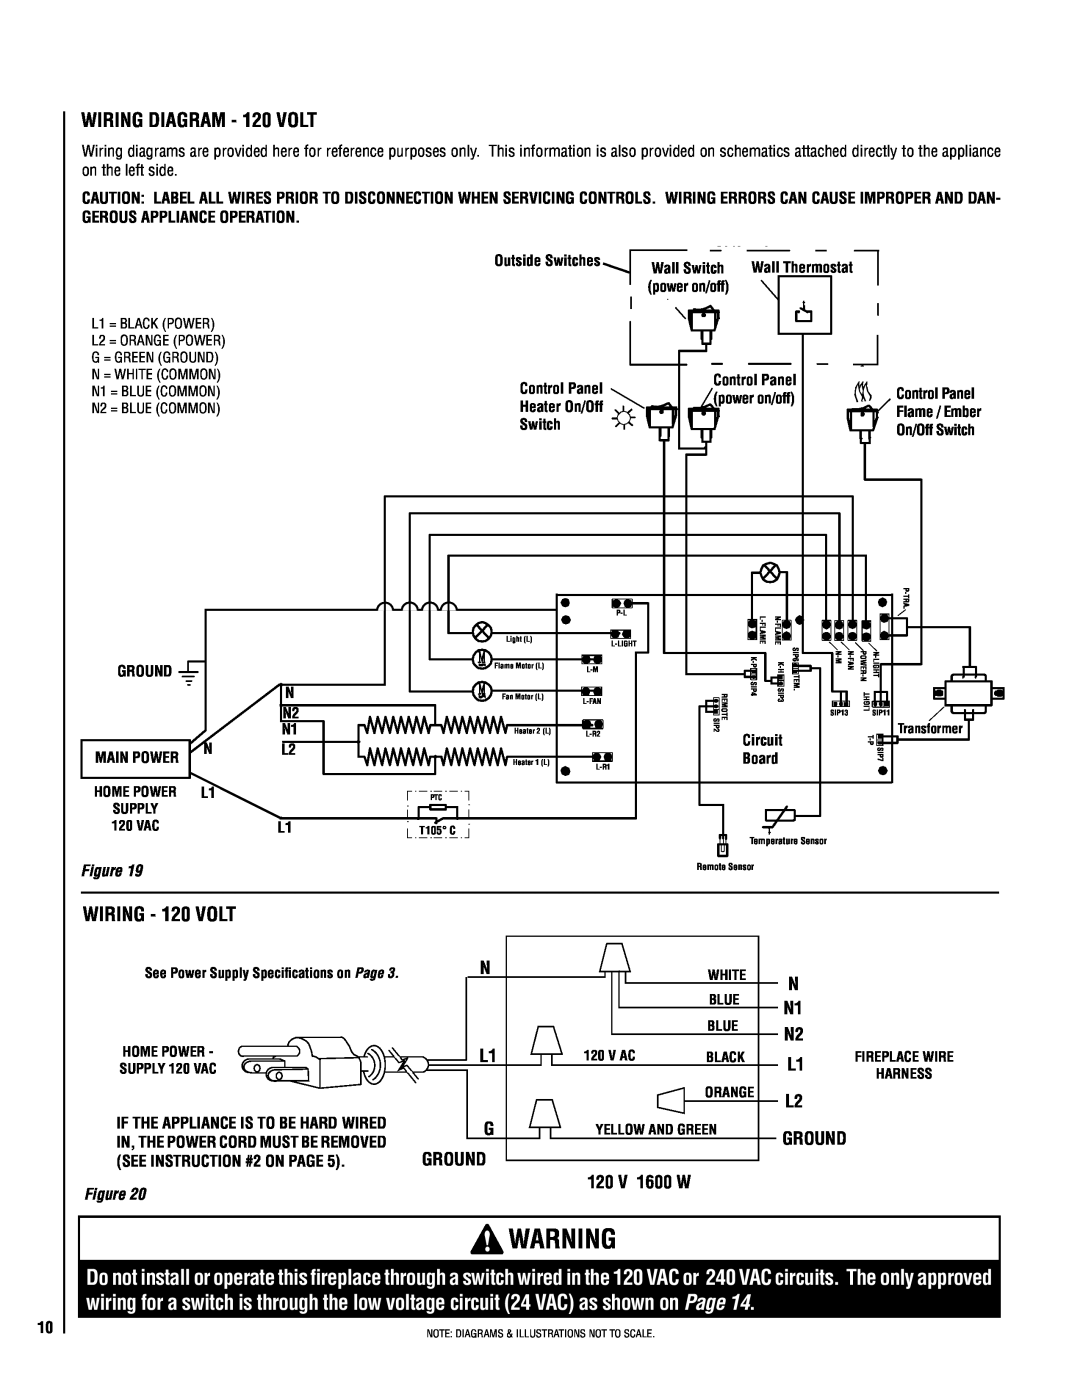 Lennox Hearth MPE-36R warranty Wiring Diagram - 120 volt, WIRING - 120 volt, ground, 120 v 1600 w 